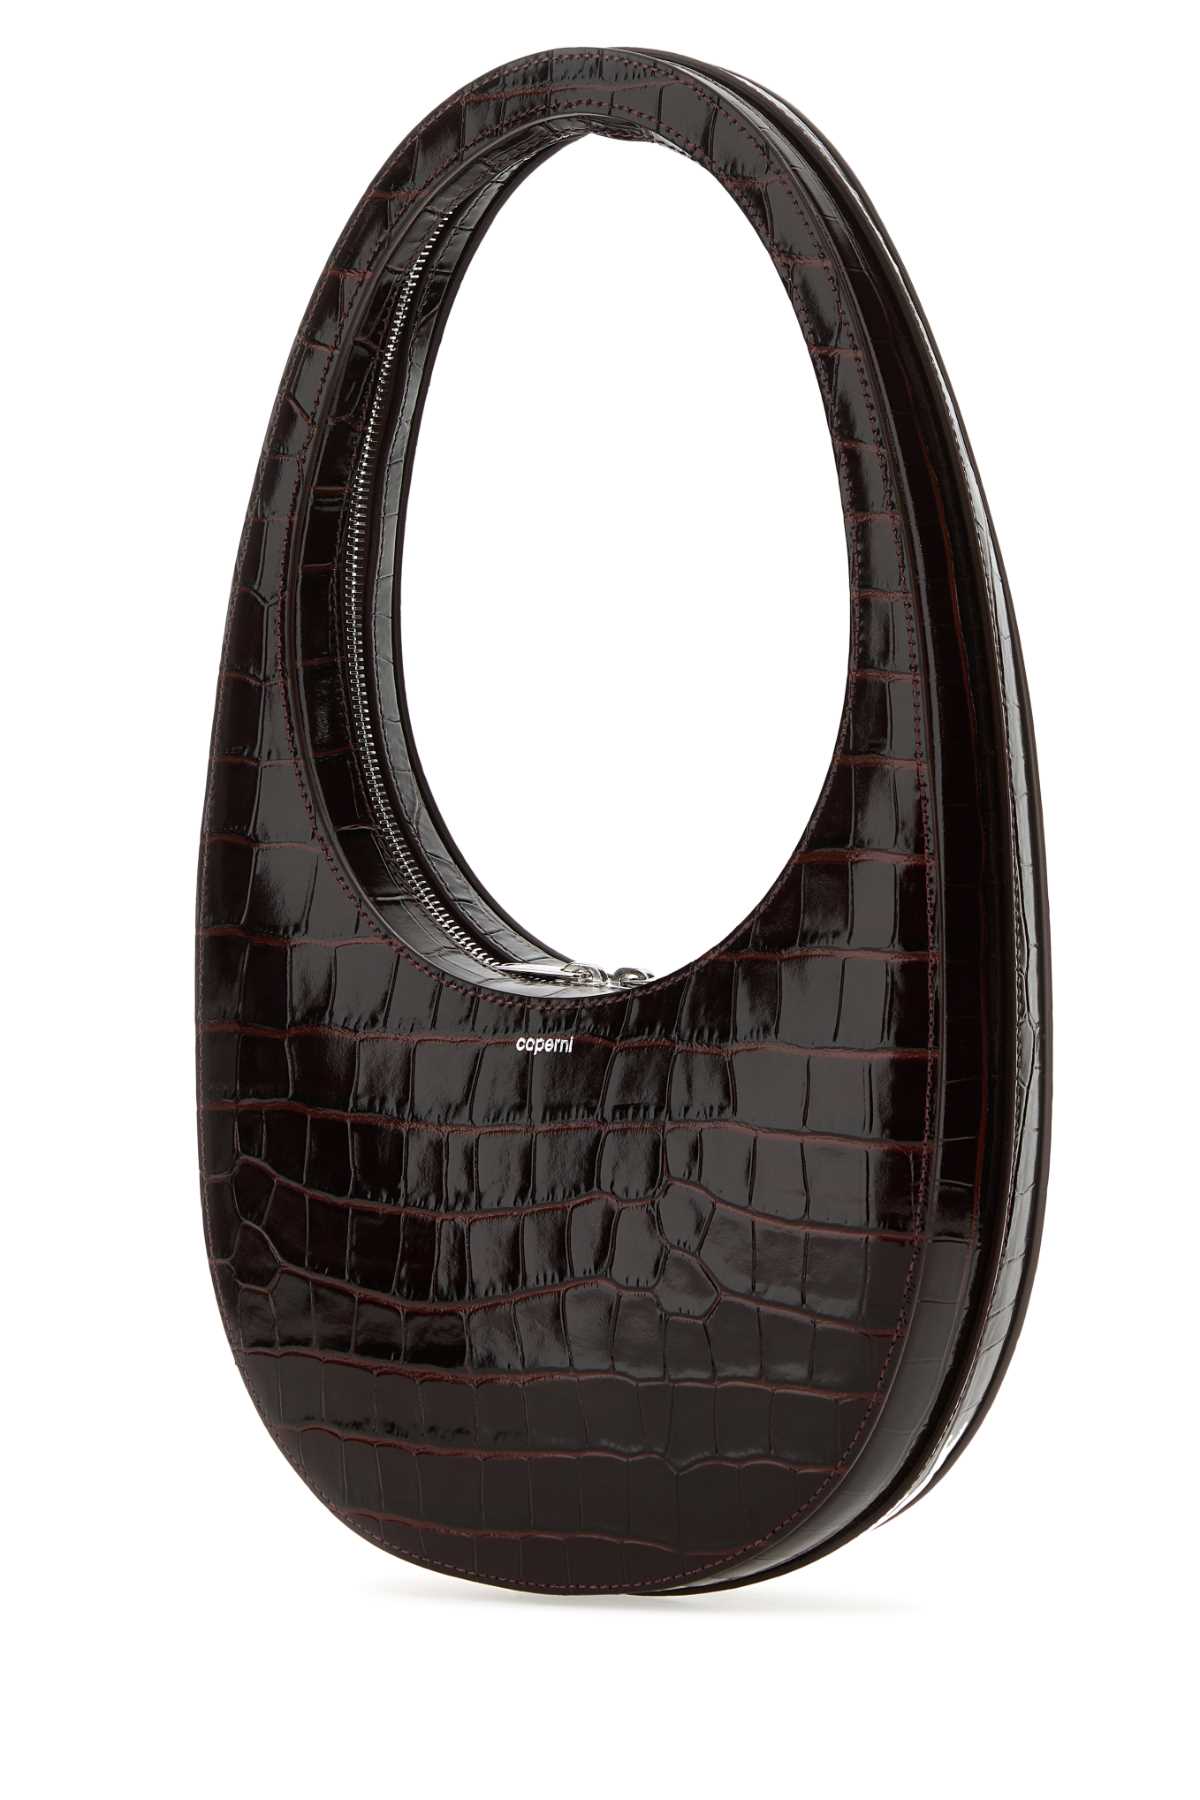 Coperni Chocolate Leather Swipe Handbag In Brown